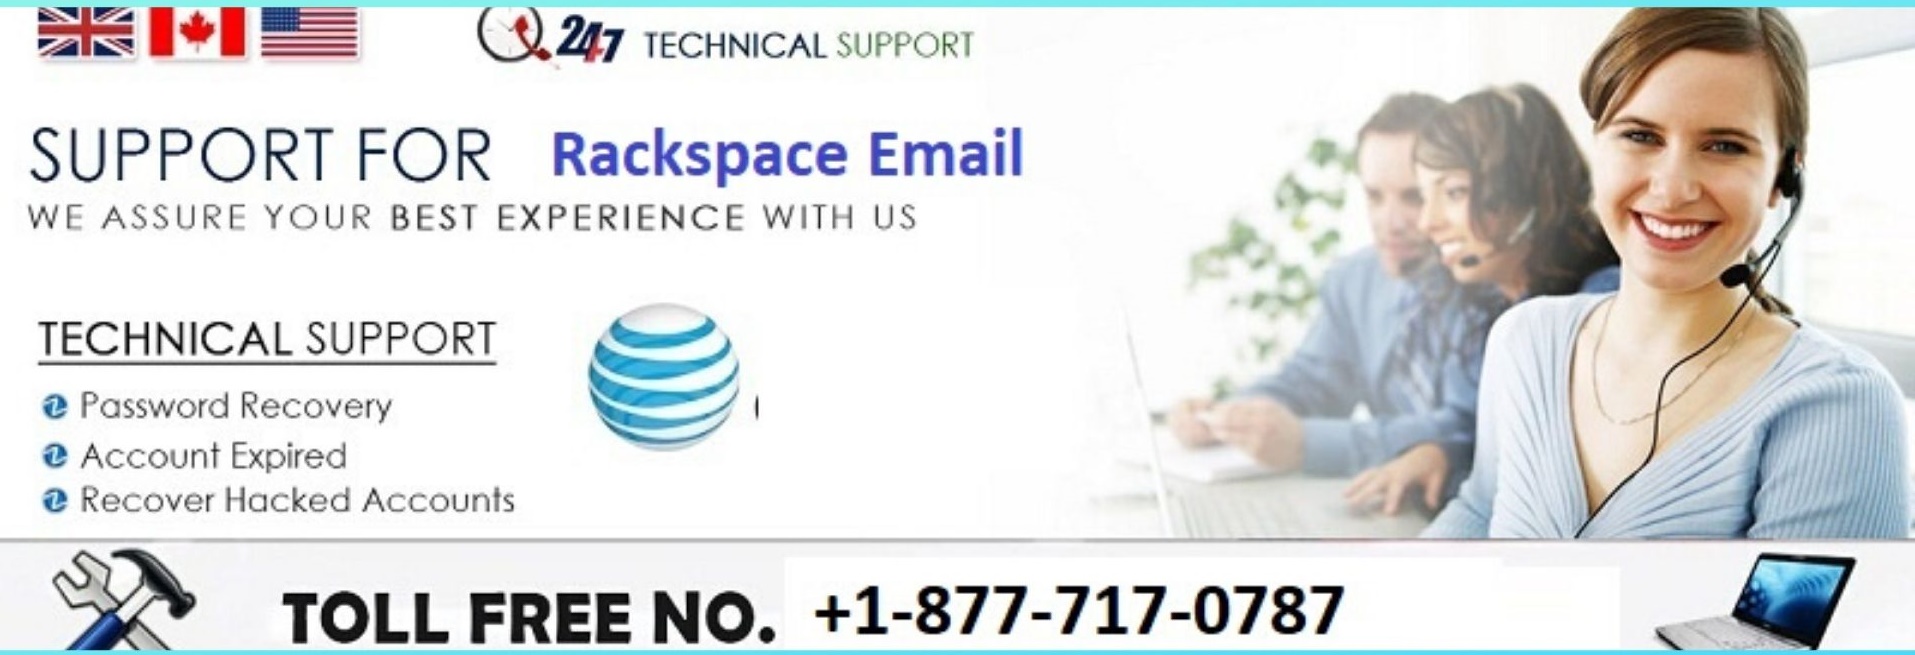 get rackspace customer service number